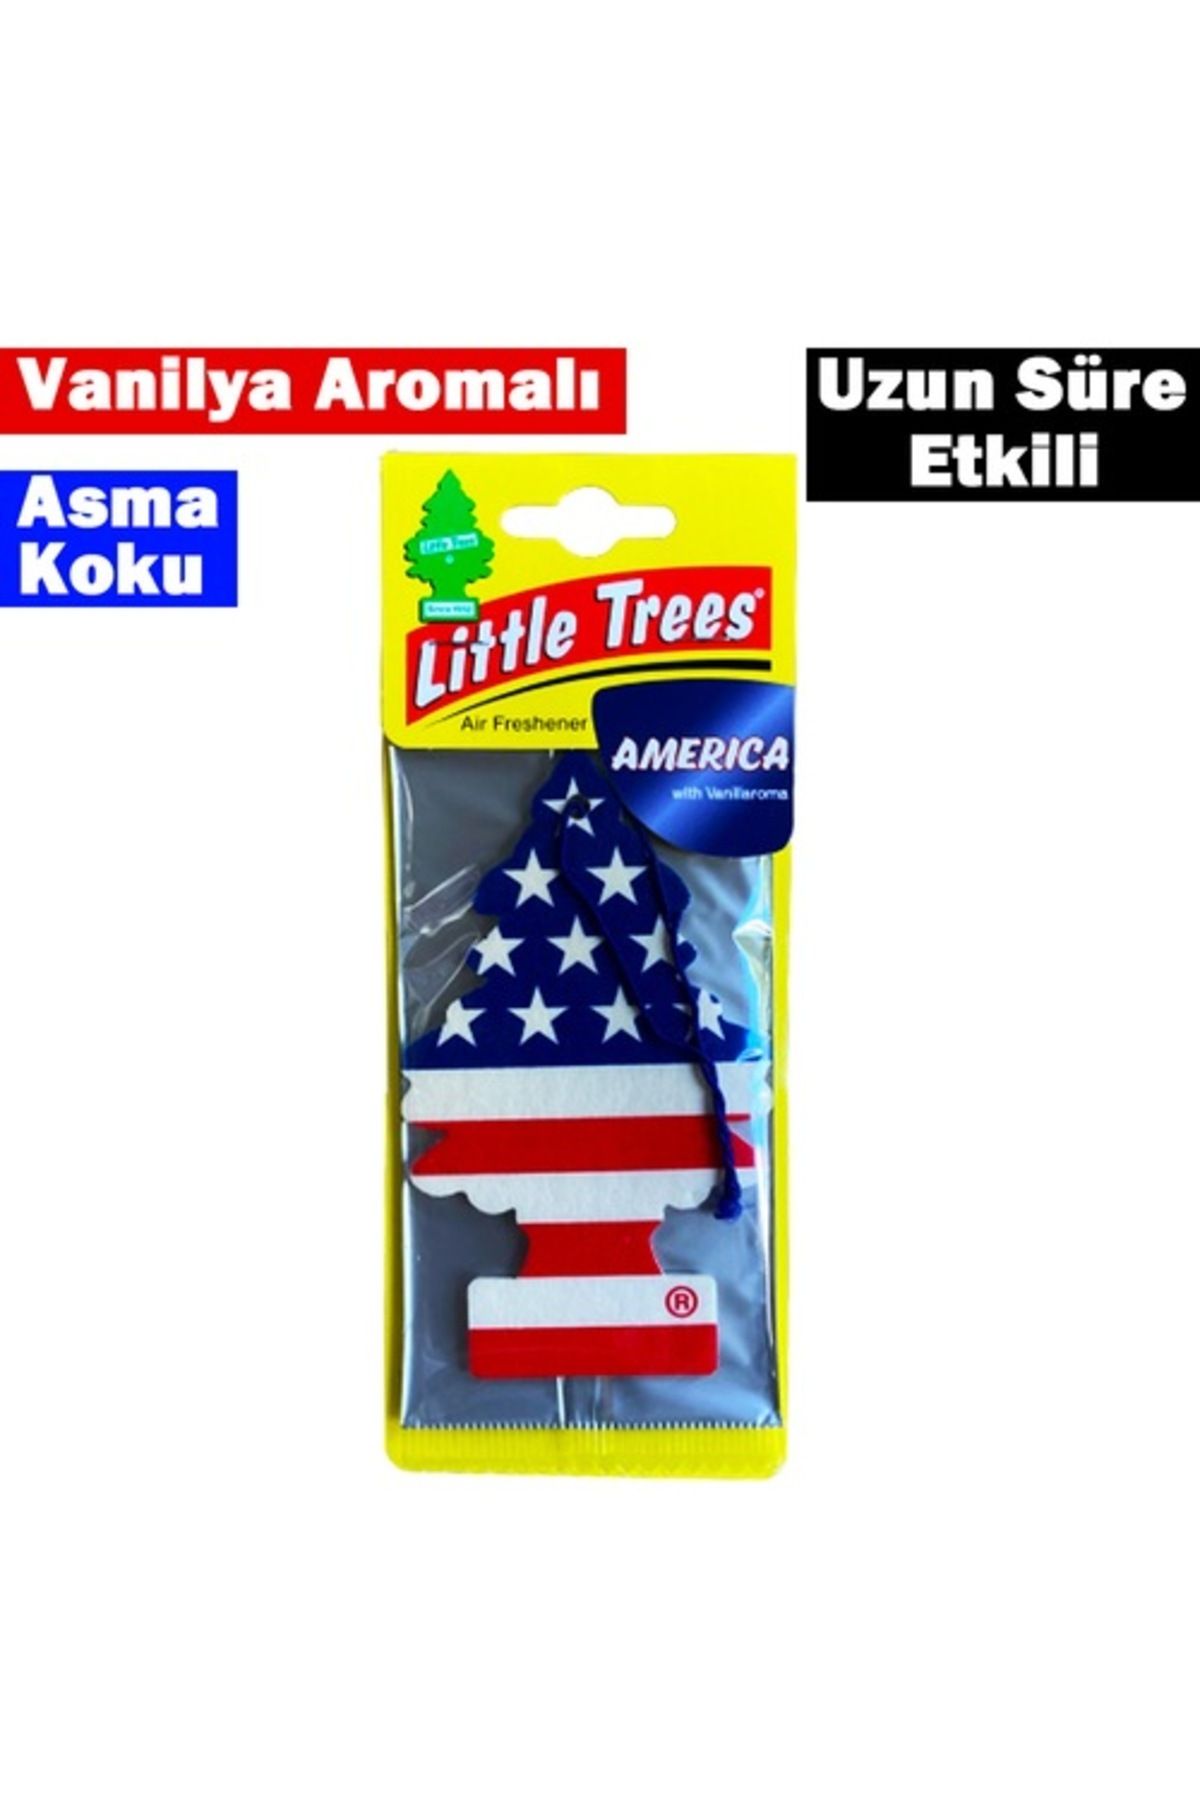 Little Trees Oto Asma Koku Vanilya Aroma Yoğun Ve Kalıcı Amerika